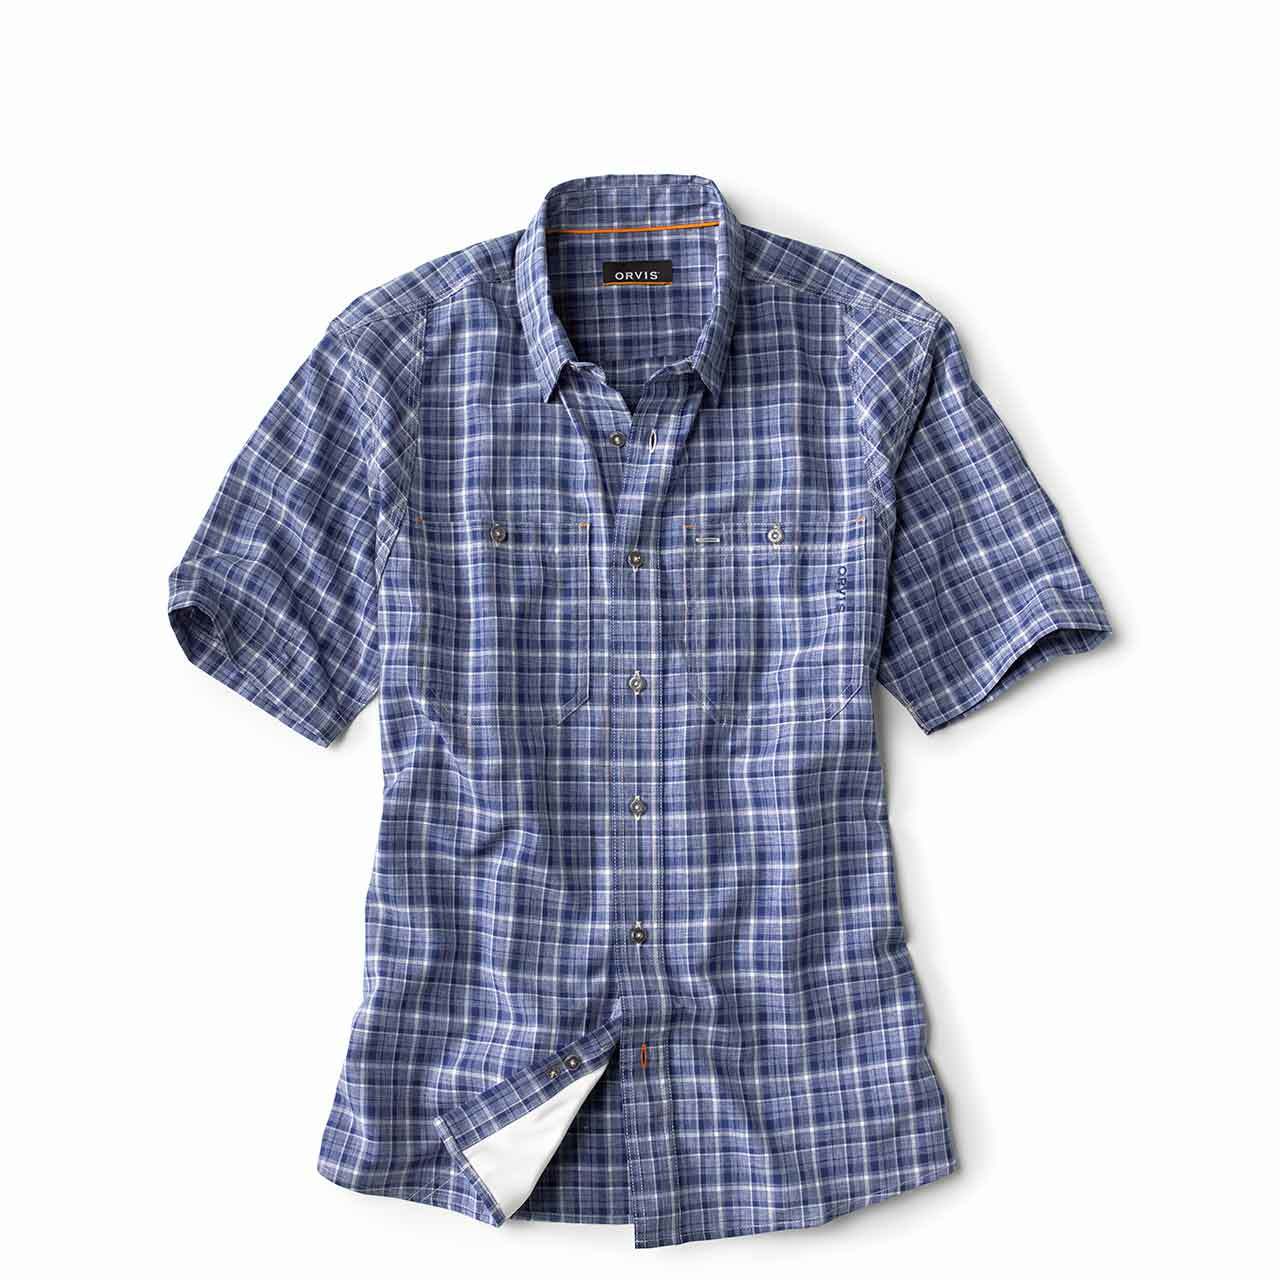 Orvis Men's OutSmart Tech Chambray Long Sleeve Shirt